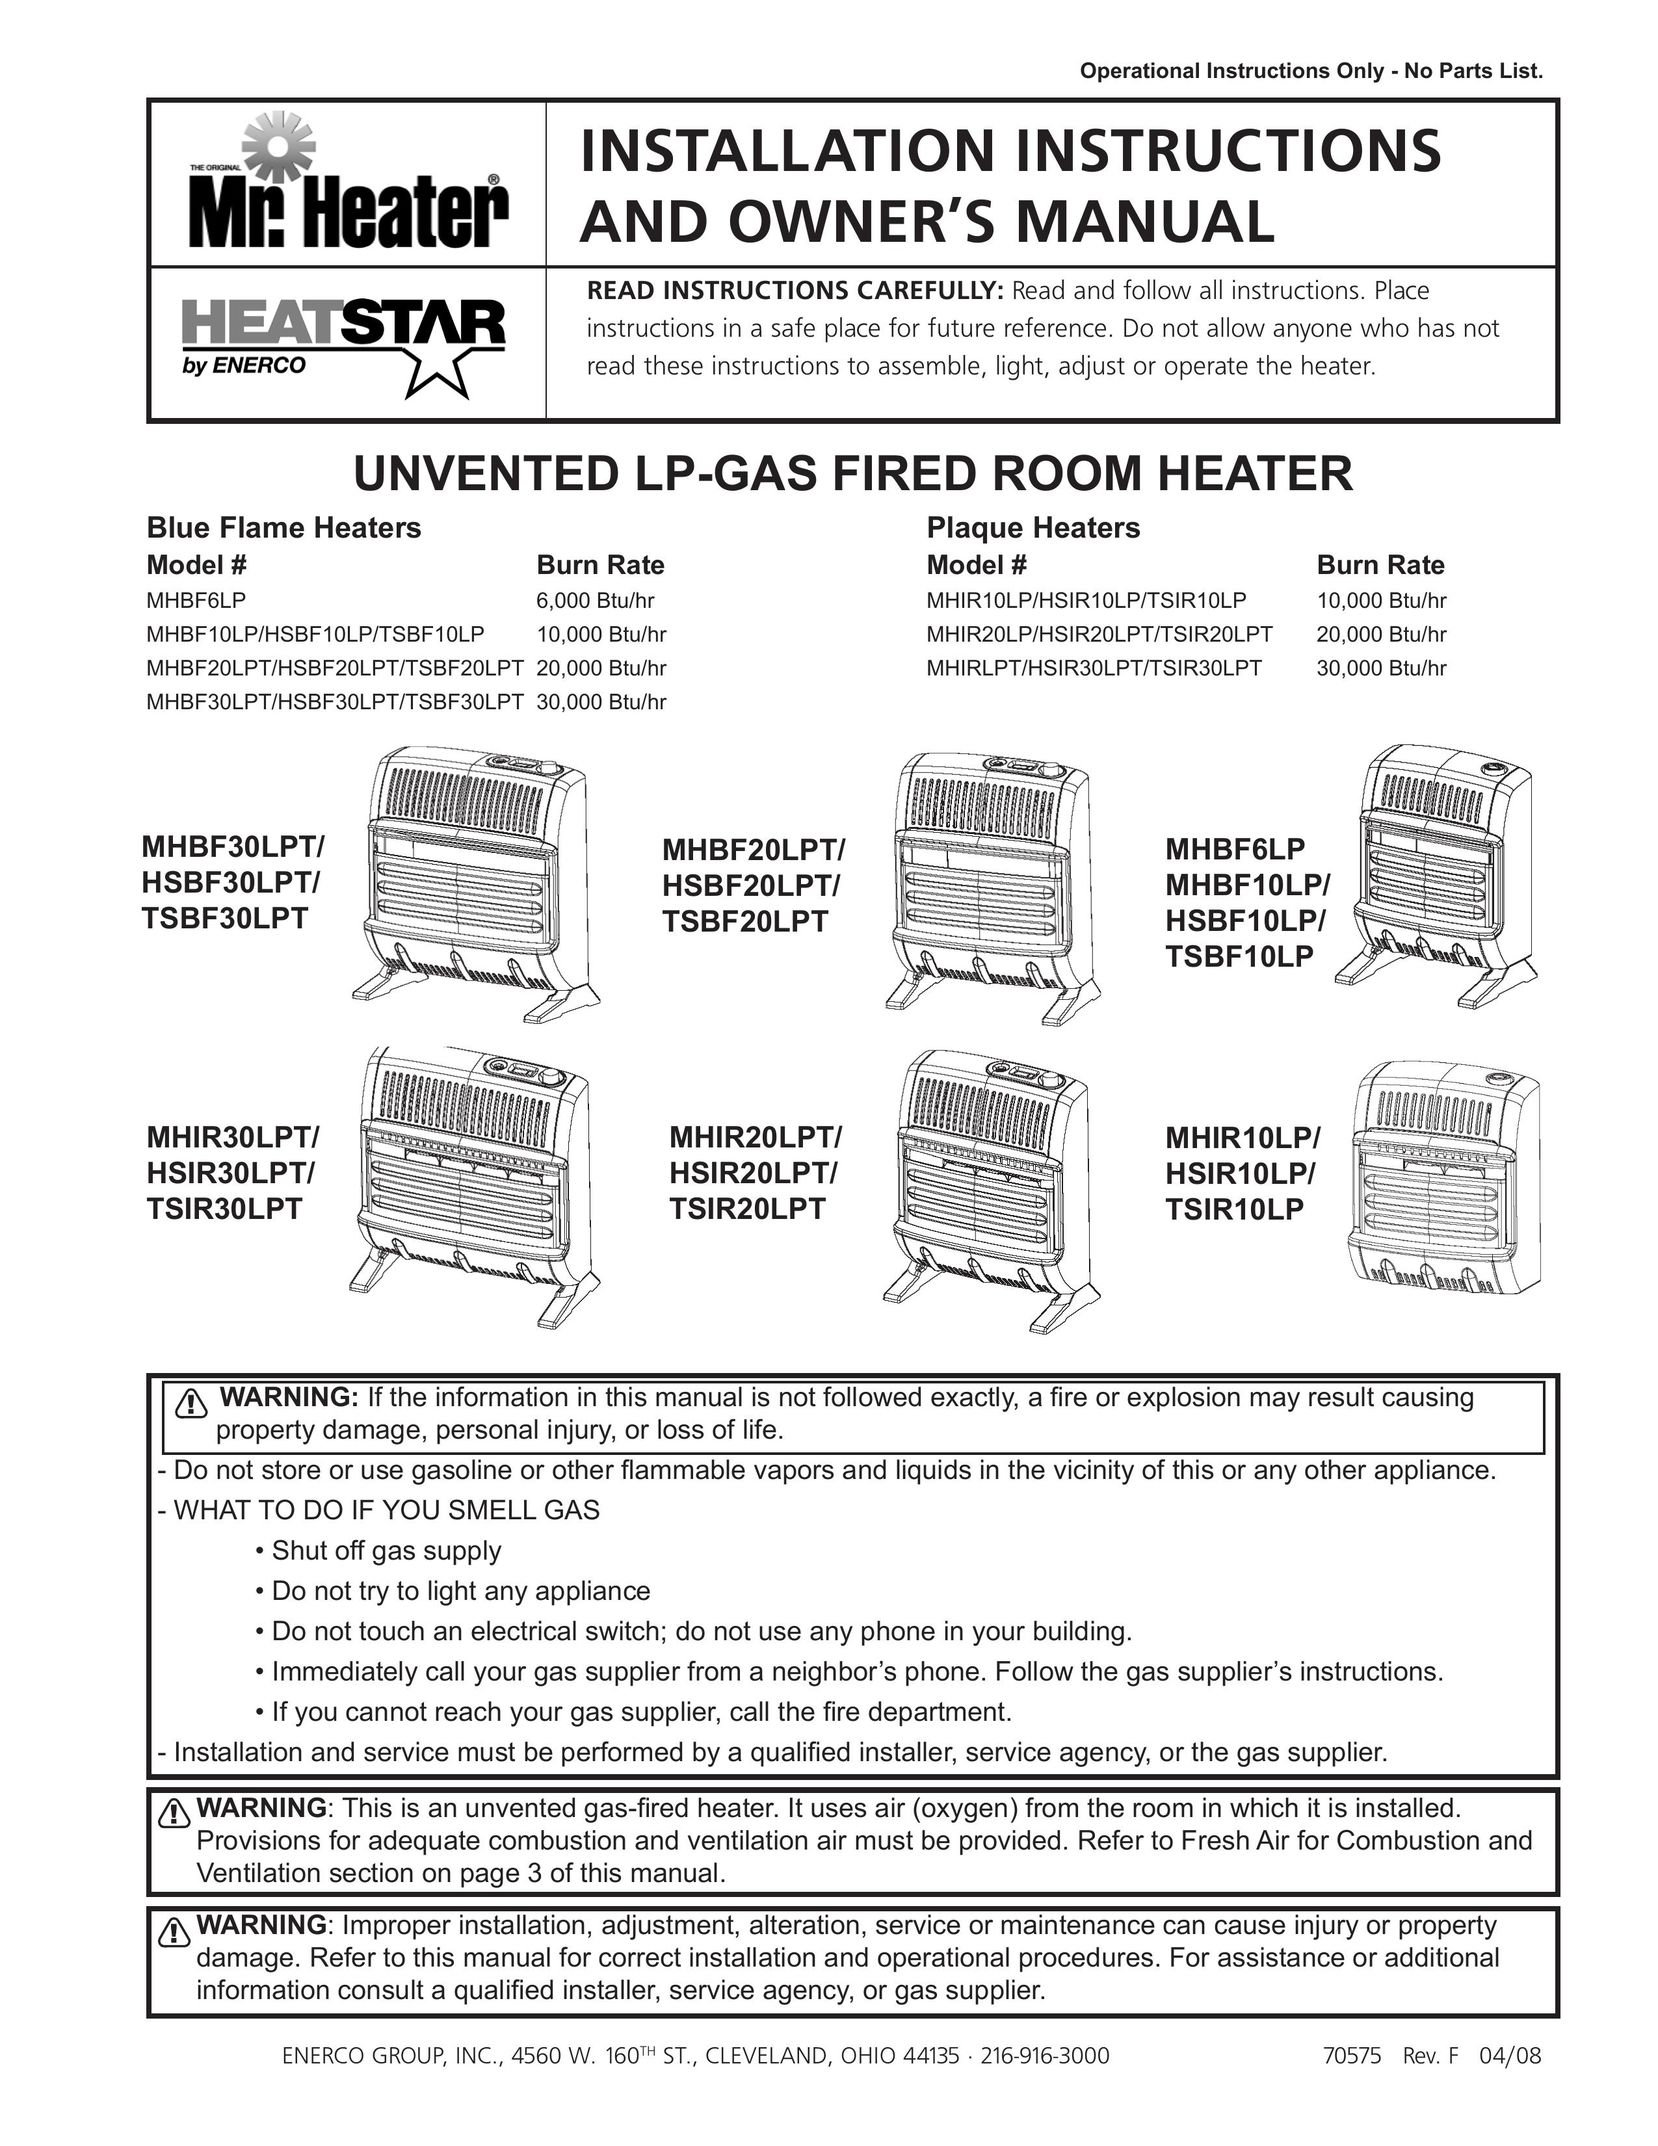 Enerco HSBF20LPT Electric Heater User Manual